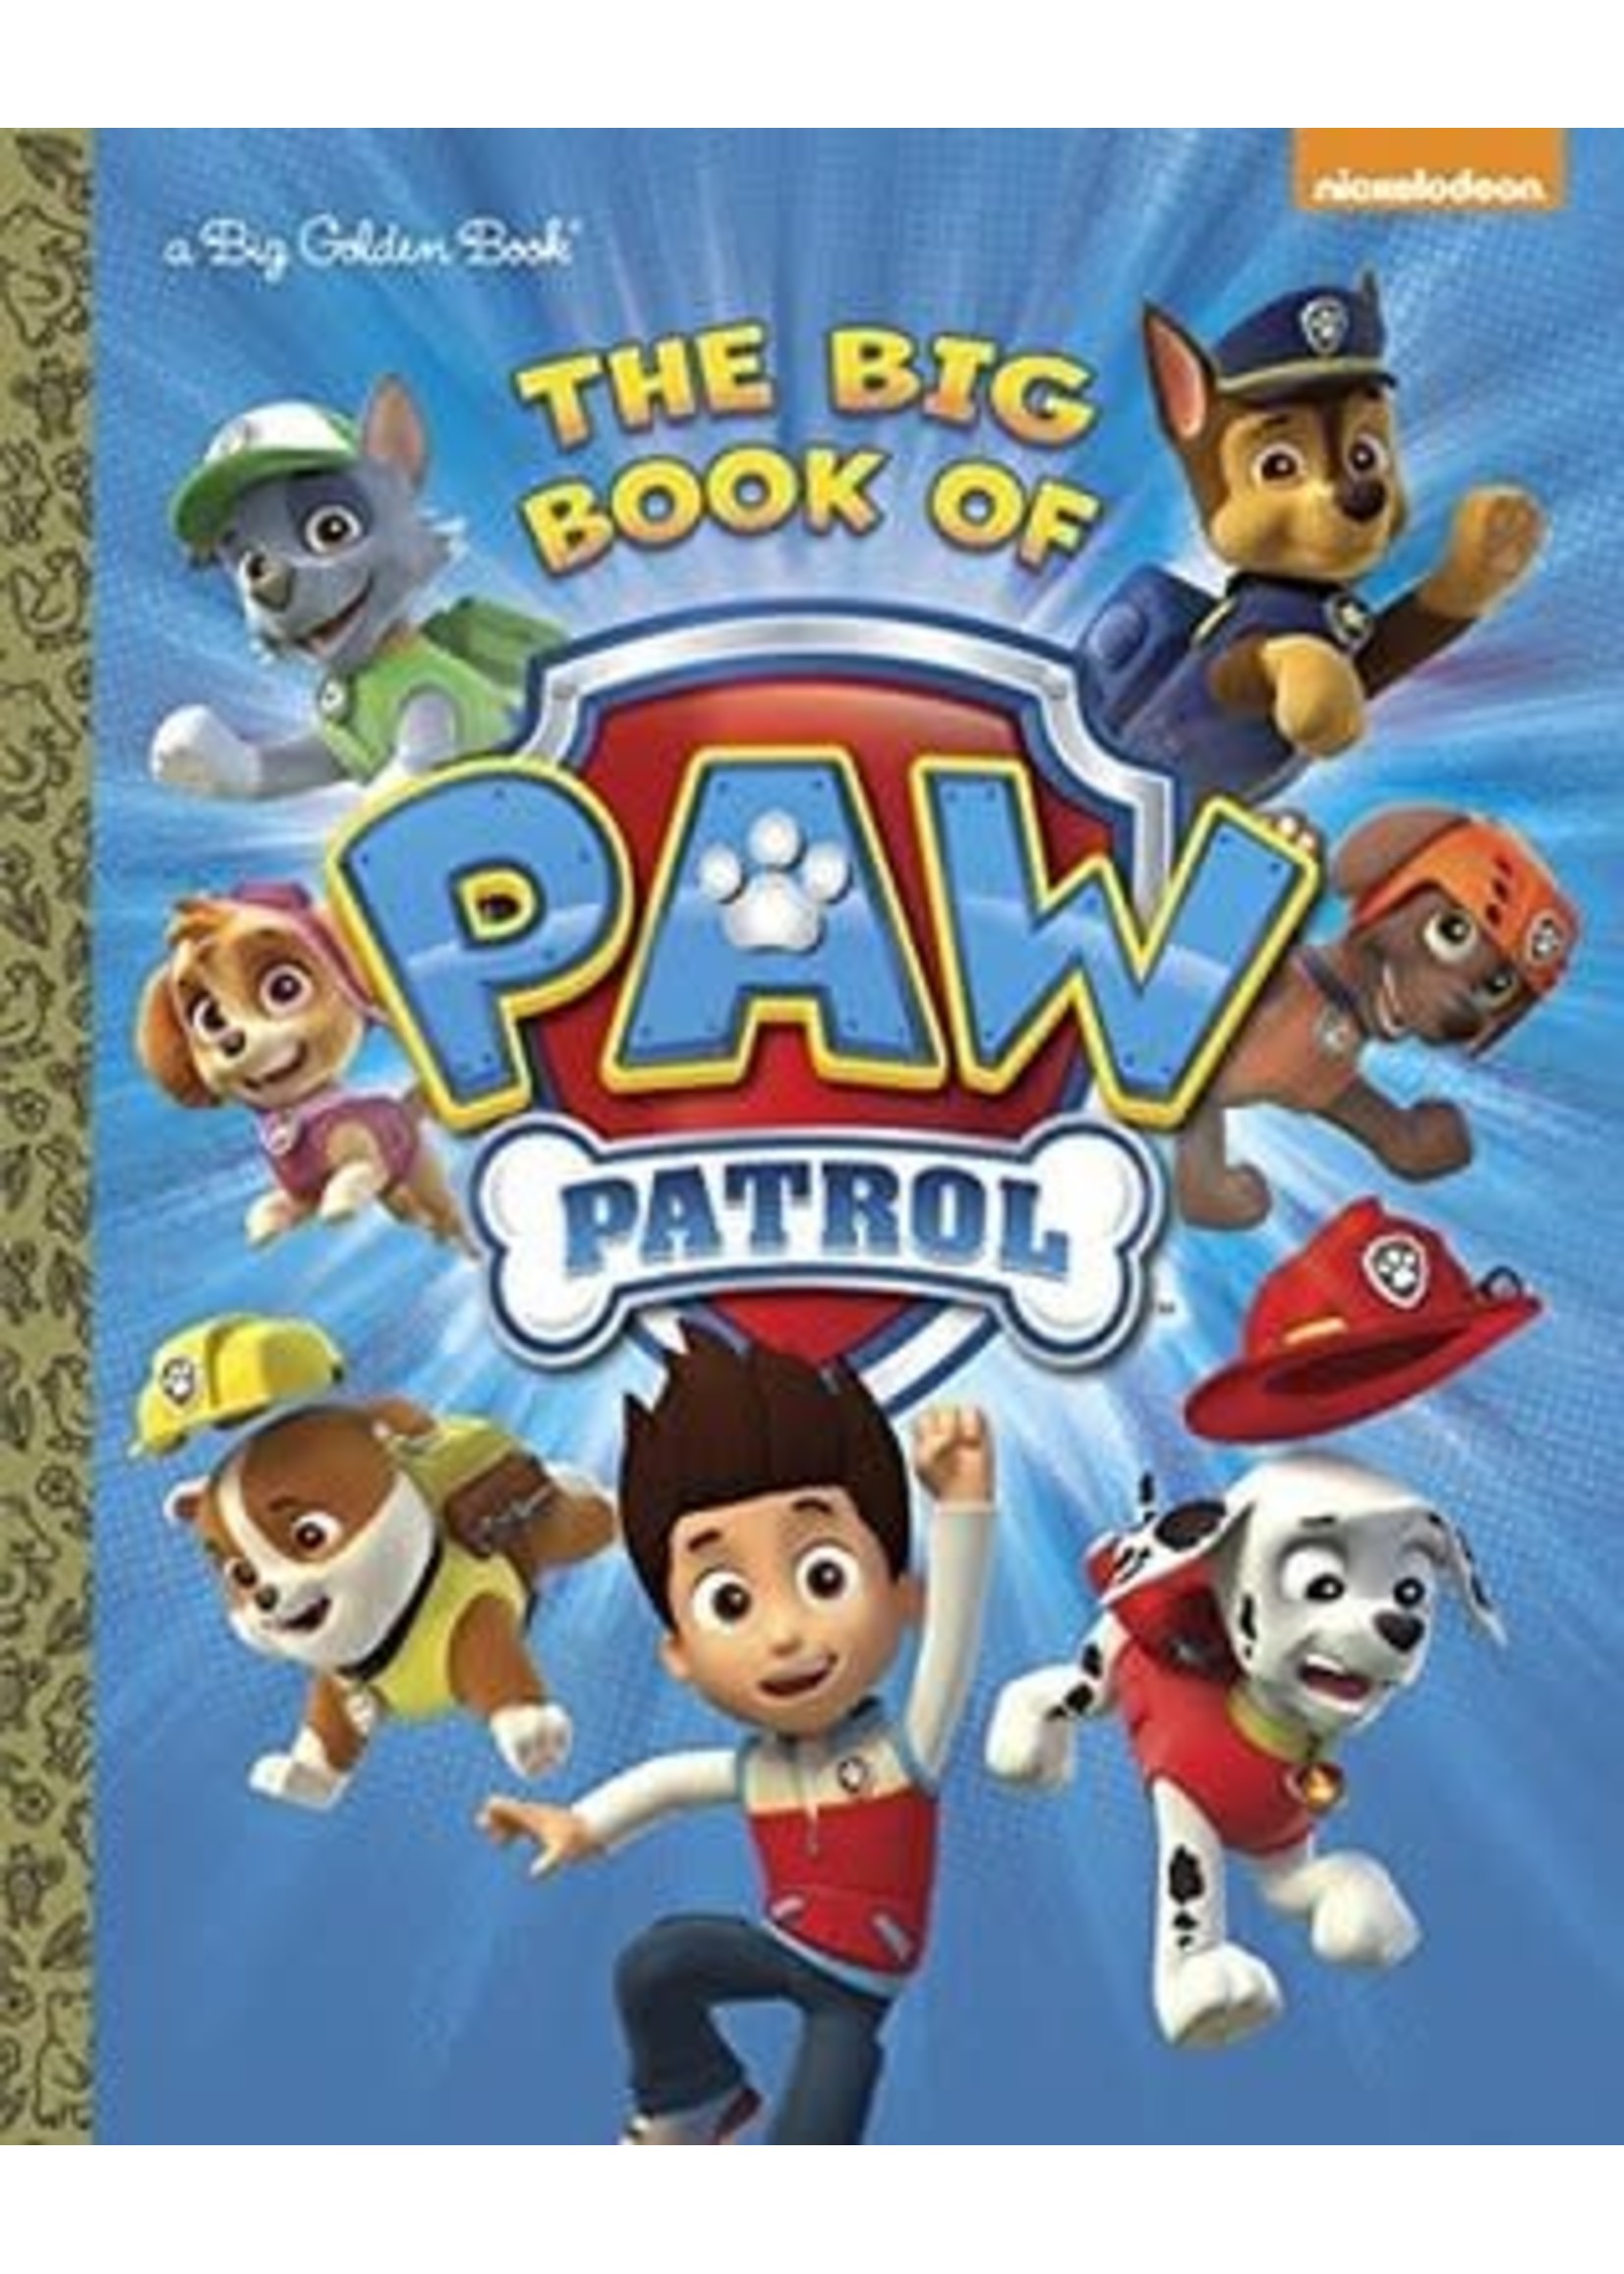 The Big Book of Paw Patrol (Paw Patrol) by Nickelodeon Publishing